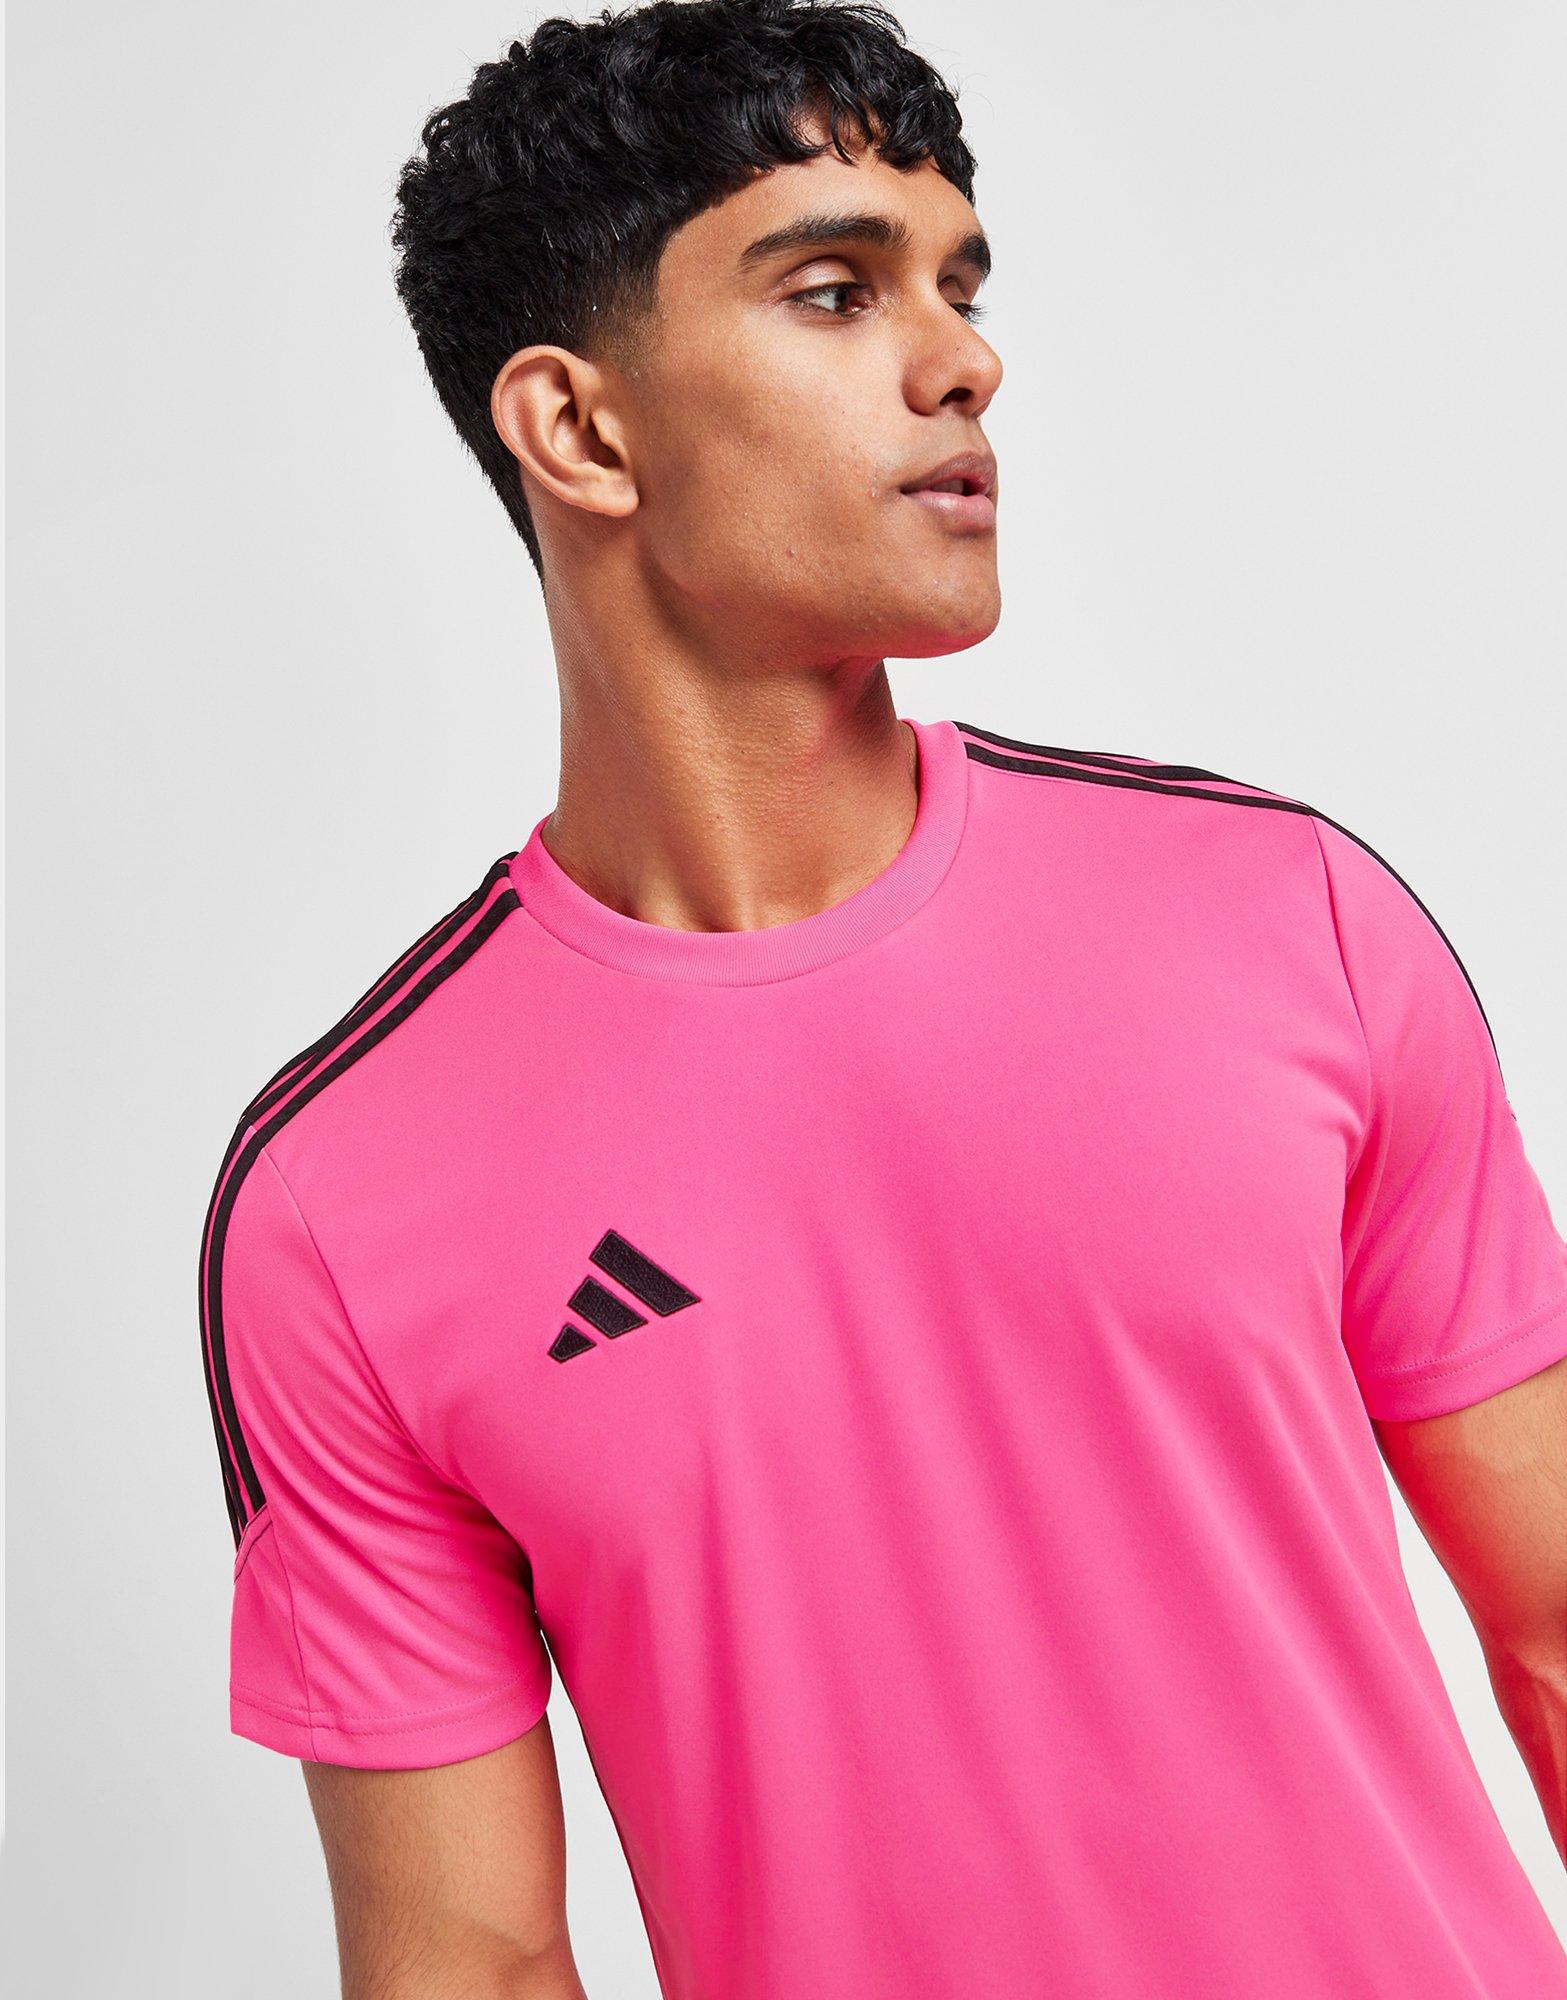 JD Pink T-Shirt Tiro Global adidas - Club Sports Training